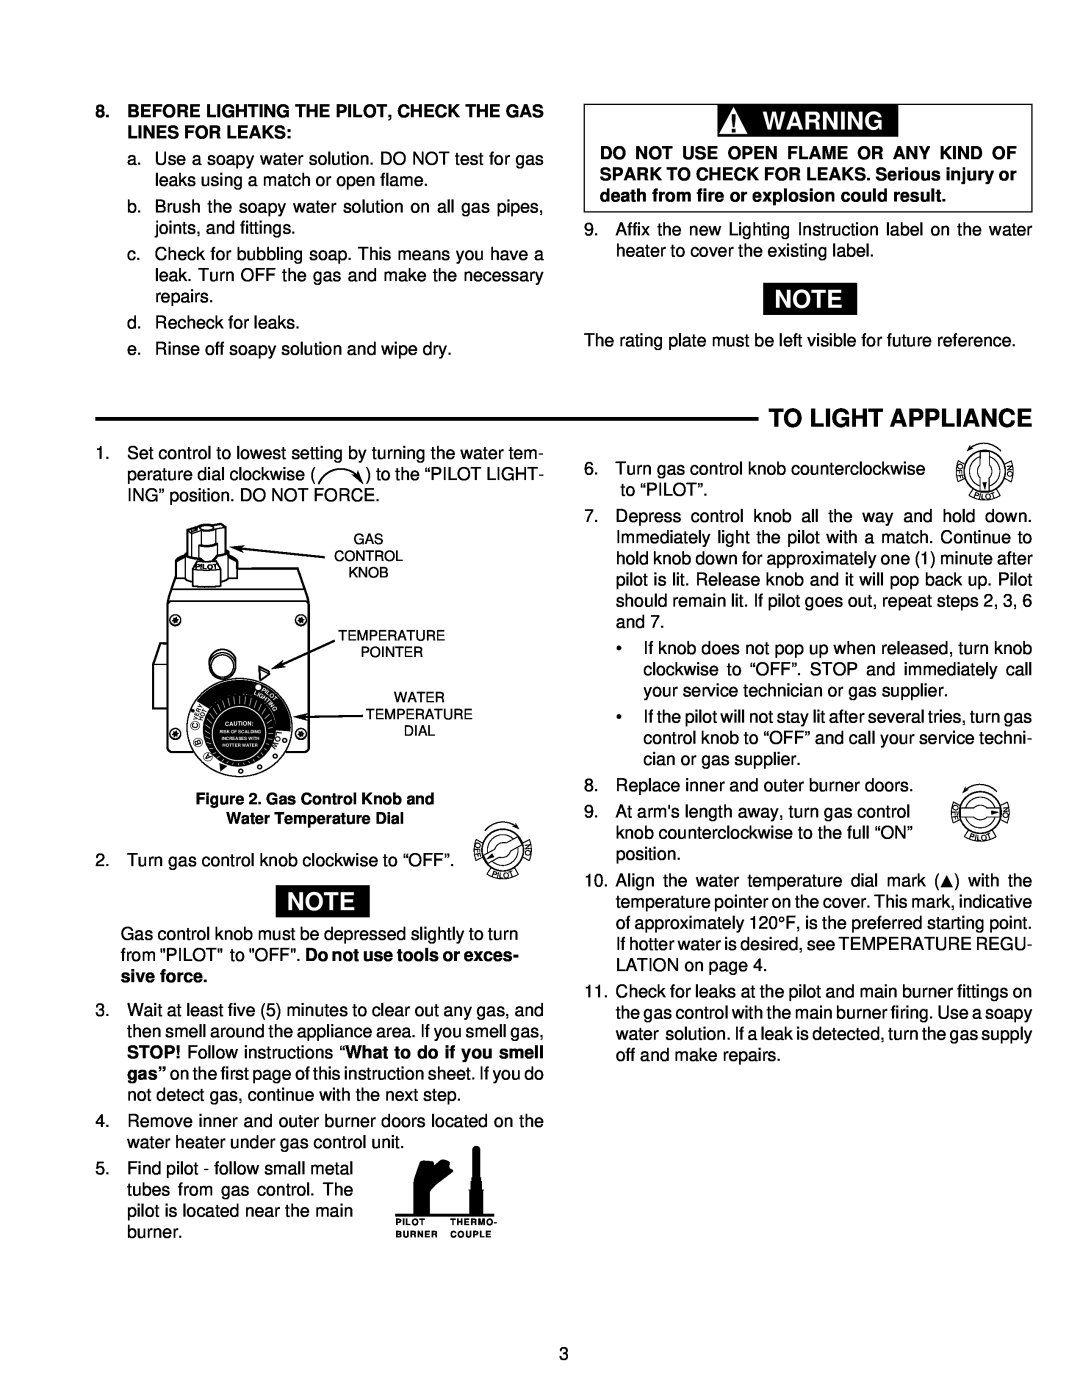 White Rodgers 37C73U installation instructions To Light Appliance, burner 